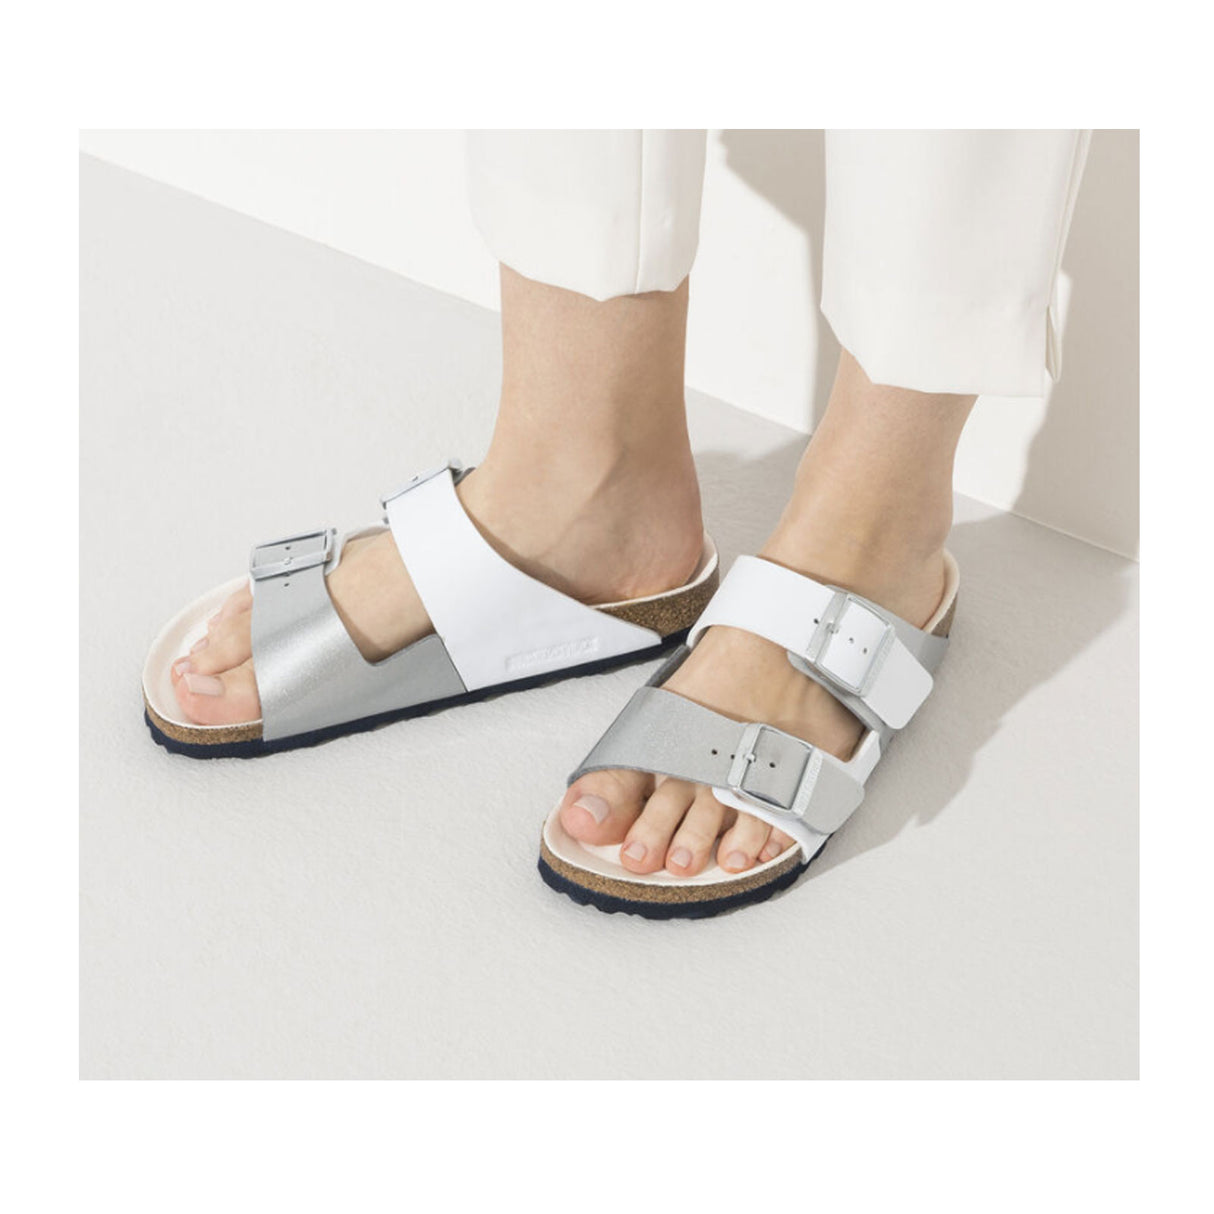 Birkenstock Arizona Split Birko-Flor Narrow Slide Sandal (Women) - White/Silver Sandals - Slide - The Heel Shoe Fitters